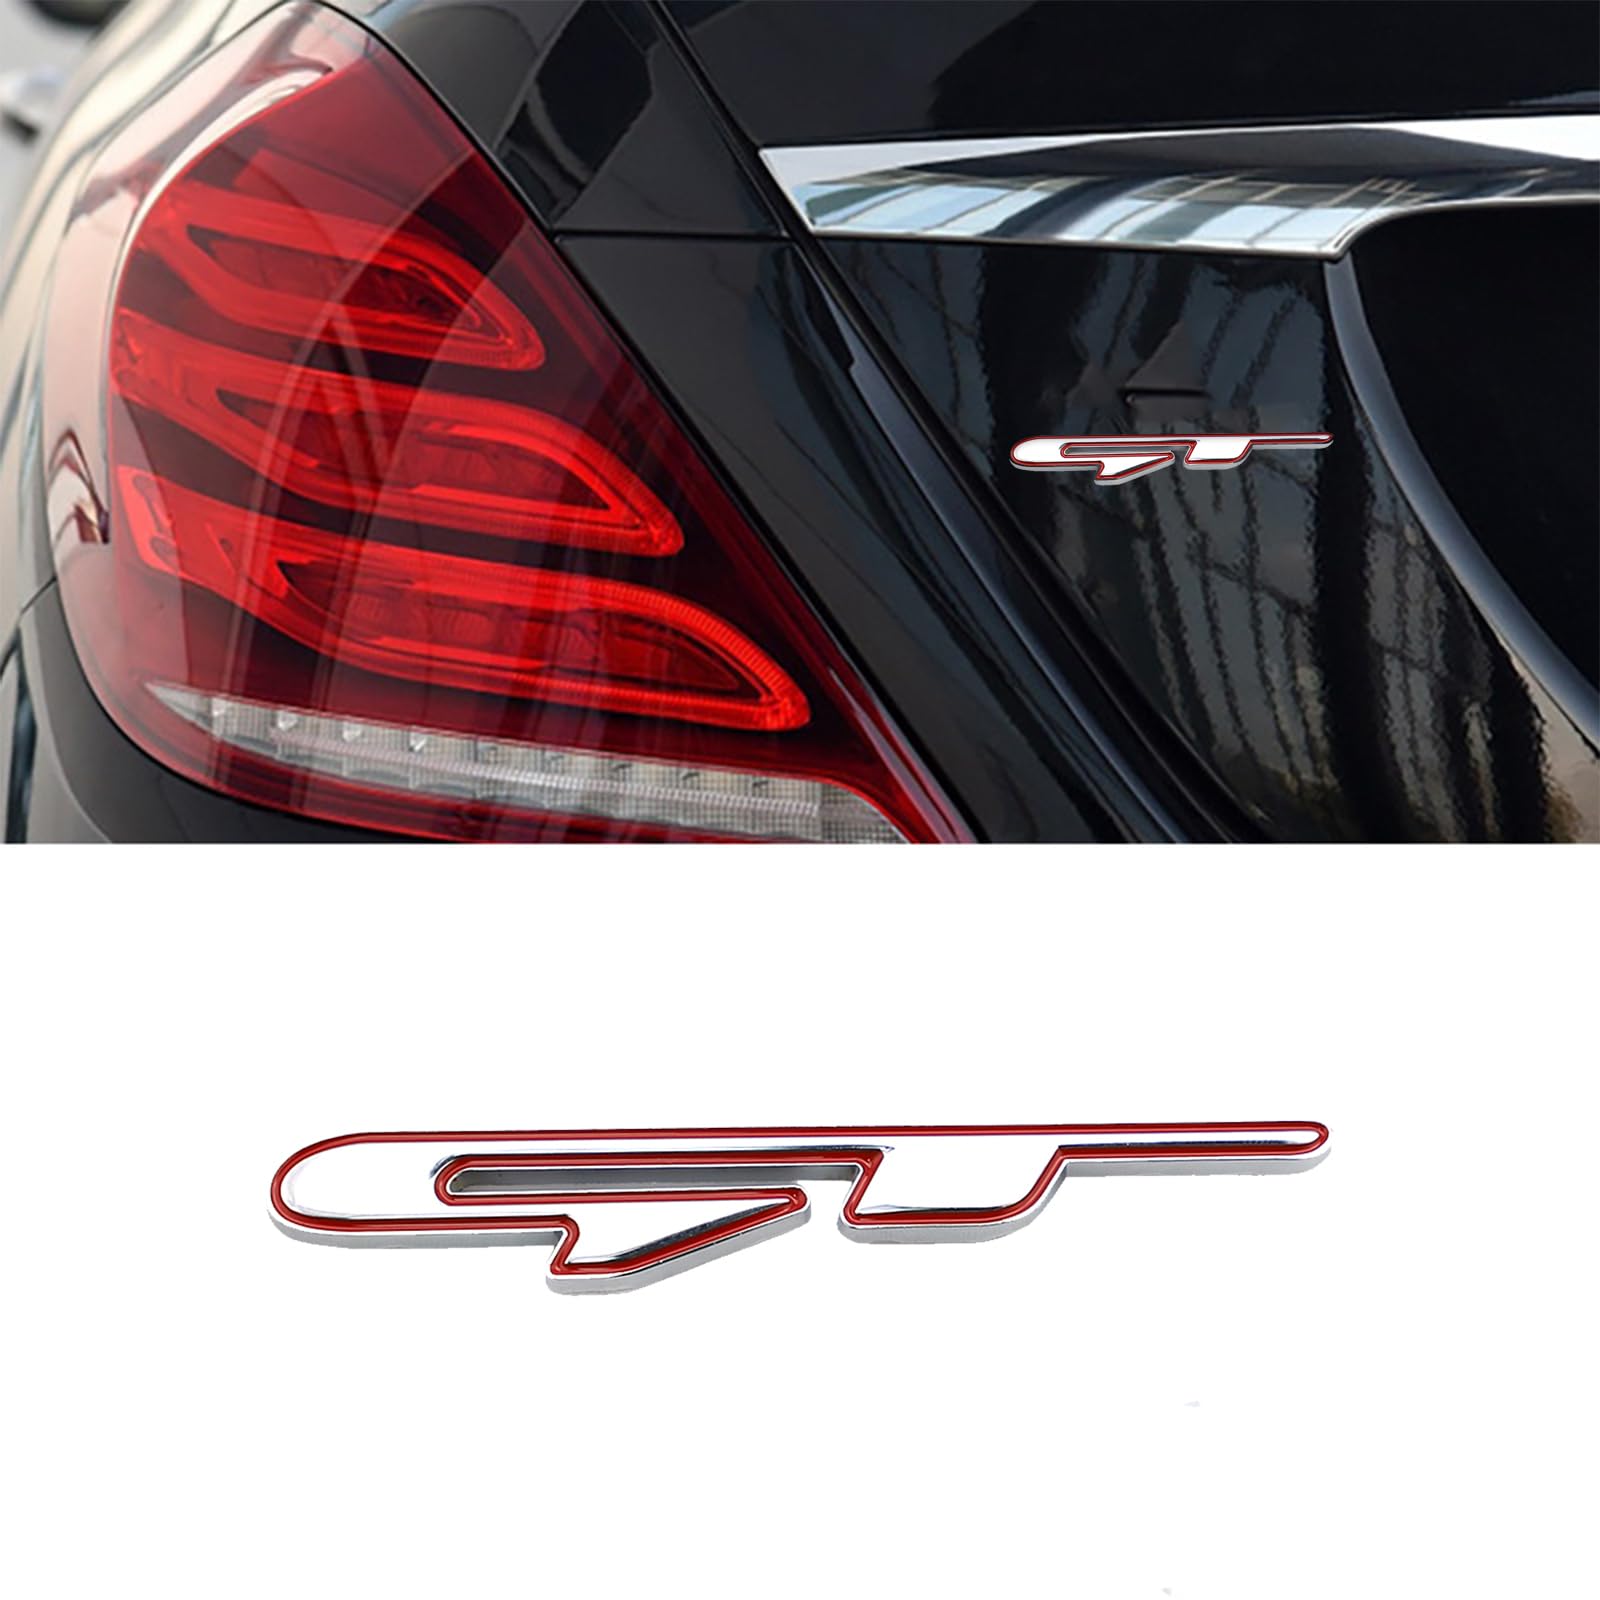 GT Emblem Metall Chrom Abzeichen Auto Kotflügel Kofferraumdeckel Kurzes Logo SUV Coupe 3D Aufkleber Aufkleber (Silber Rot) von SGW